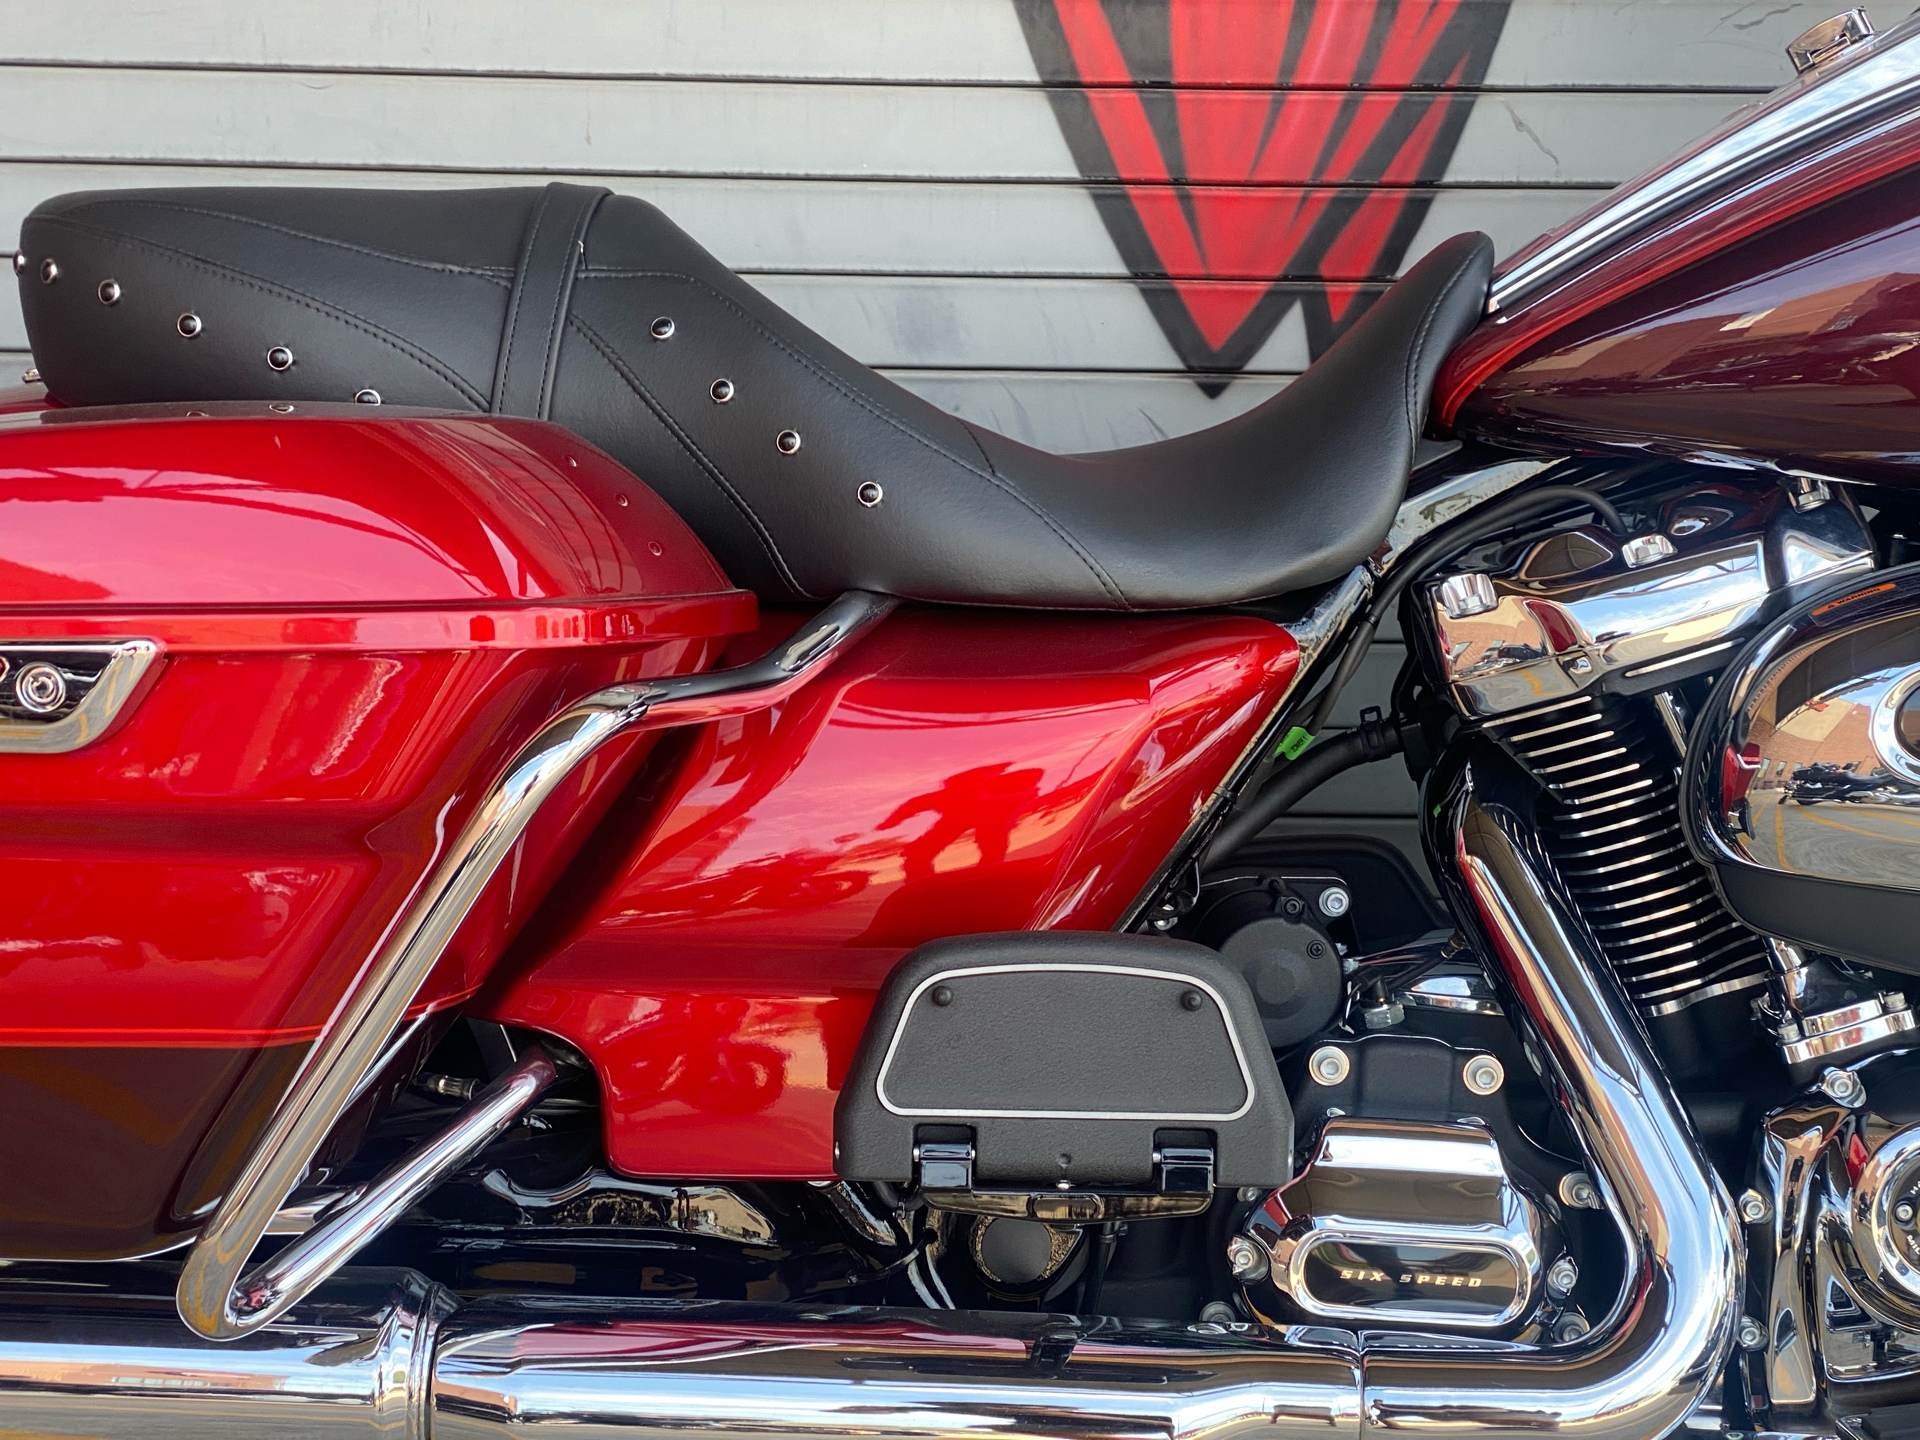 2019 Harley-Davidson Road King® in Carrollton, Texas - Photo 7